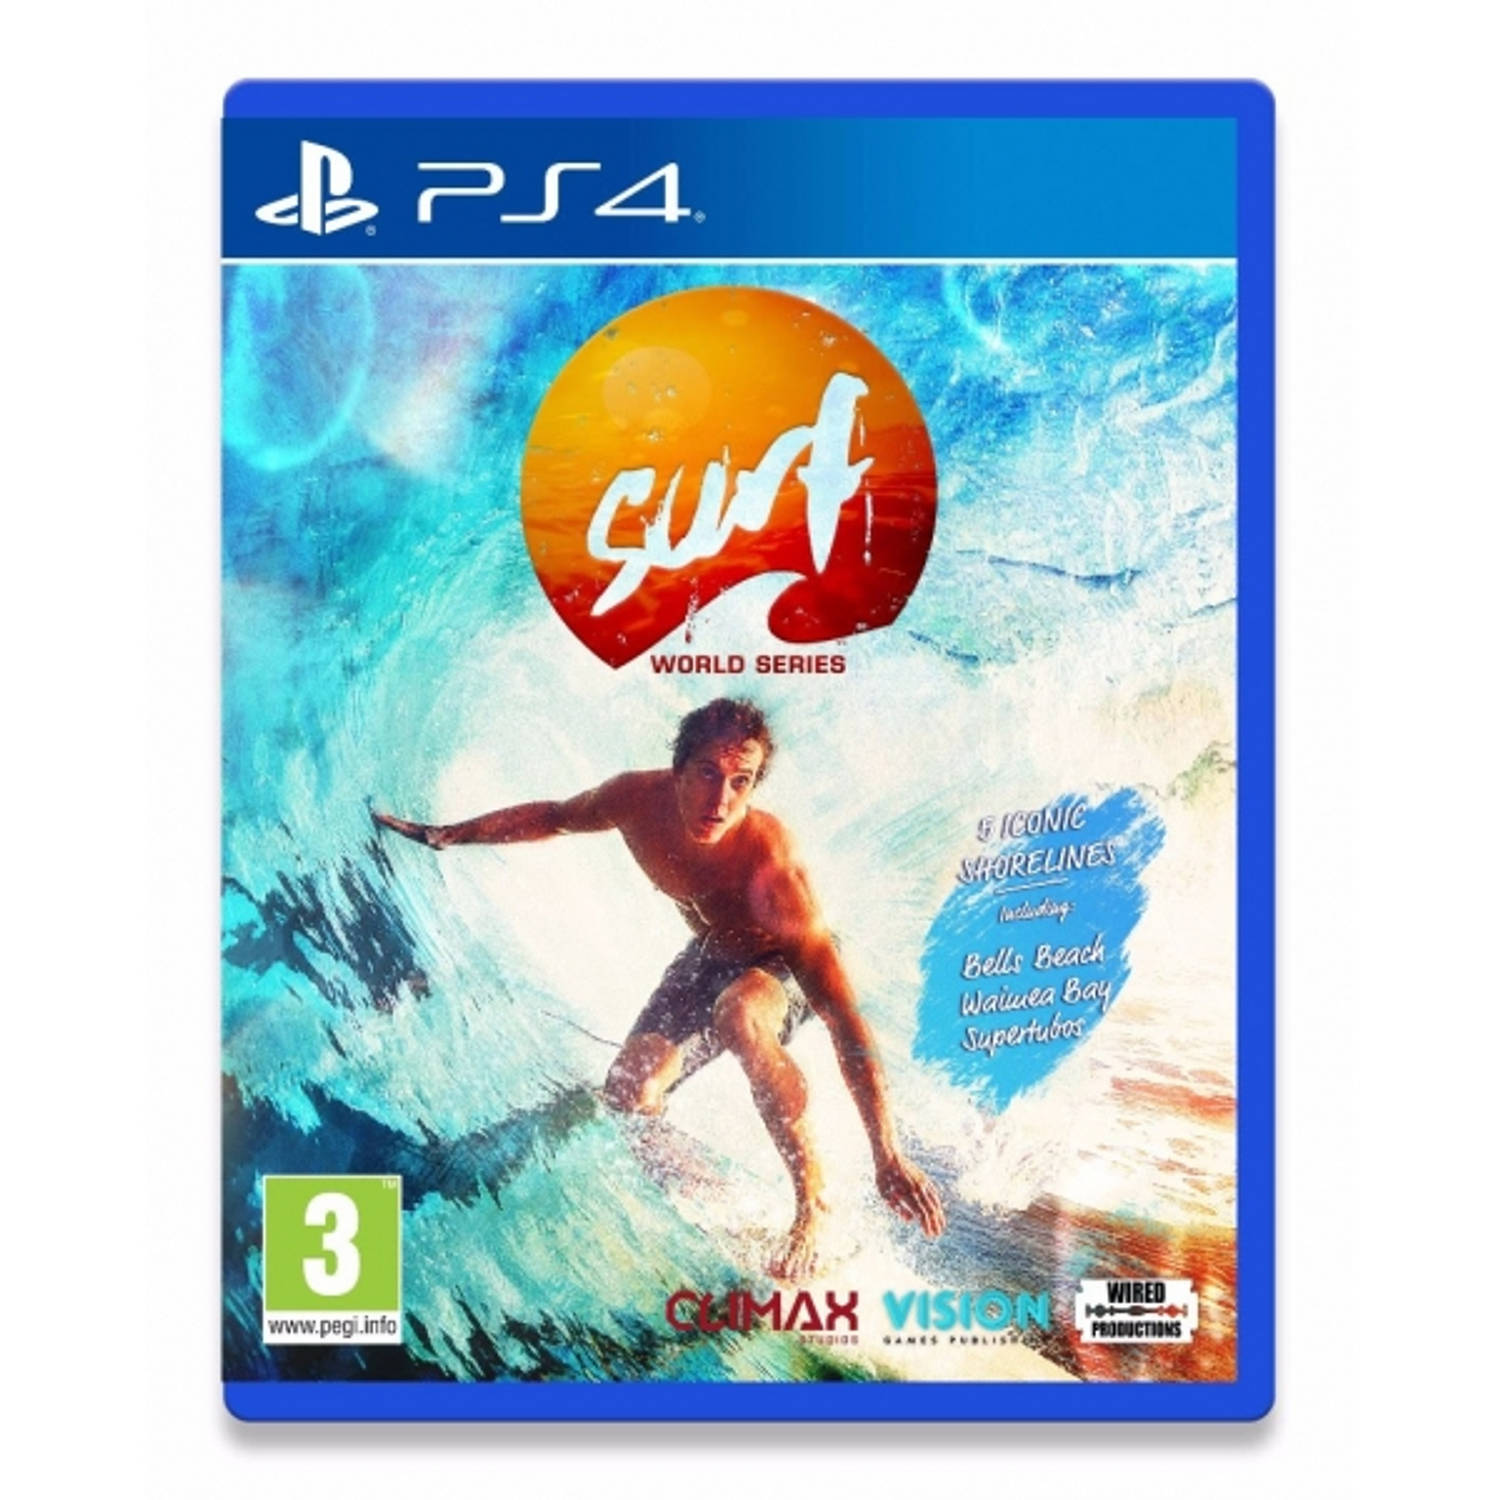 VideogamesNL surf world series PlayStation 4